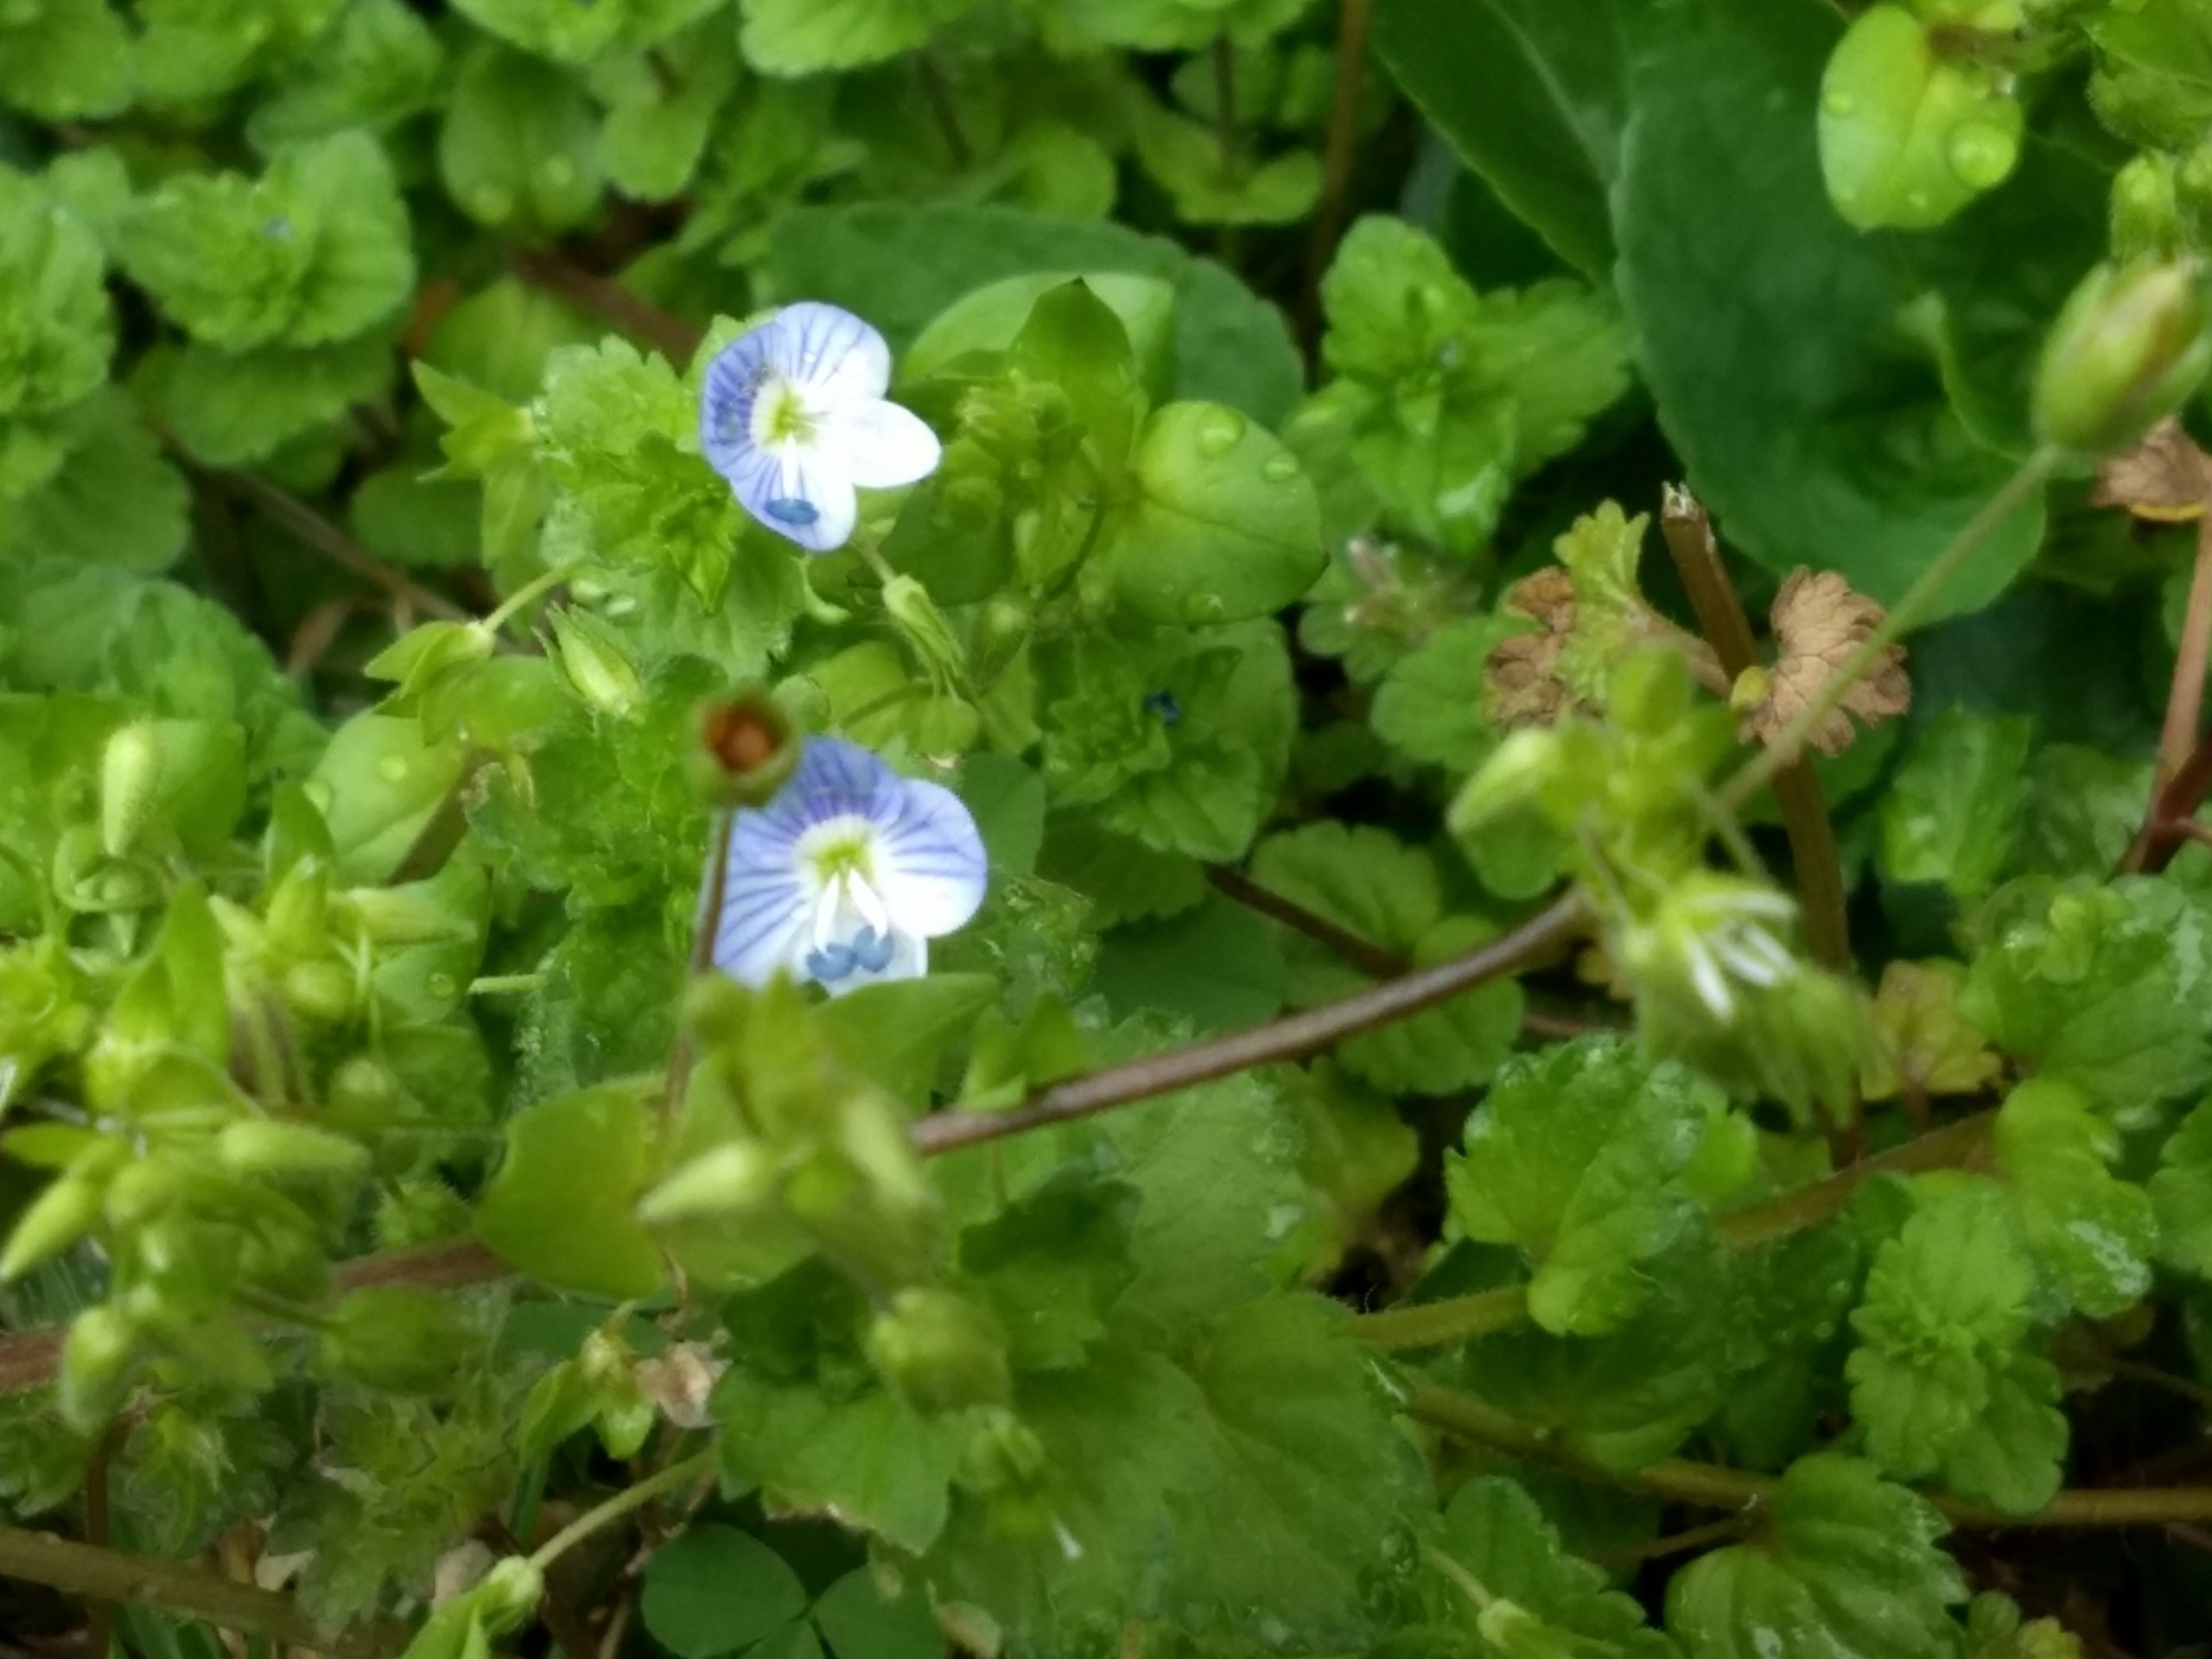 Tiny cute flowers